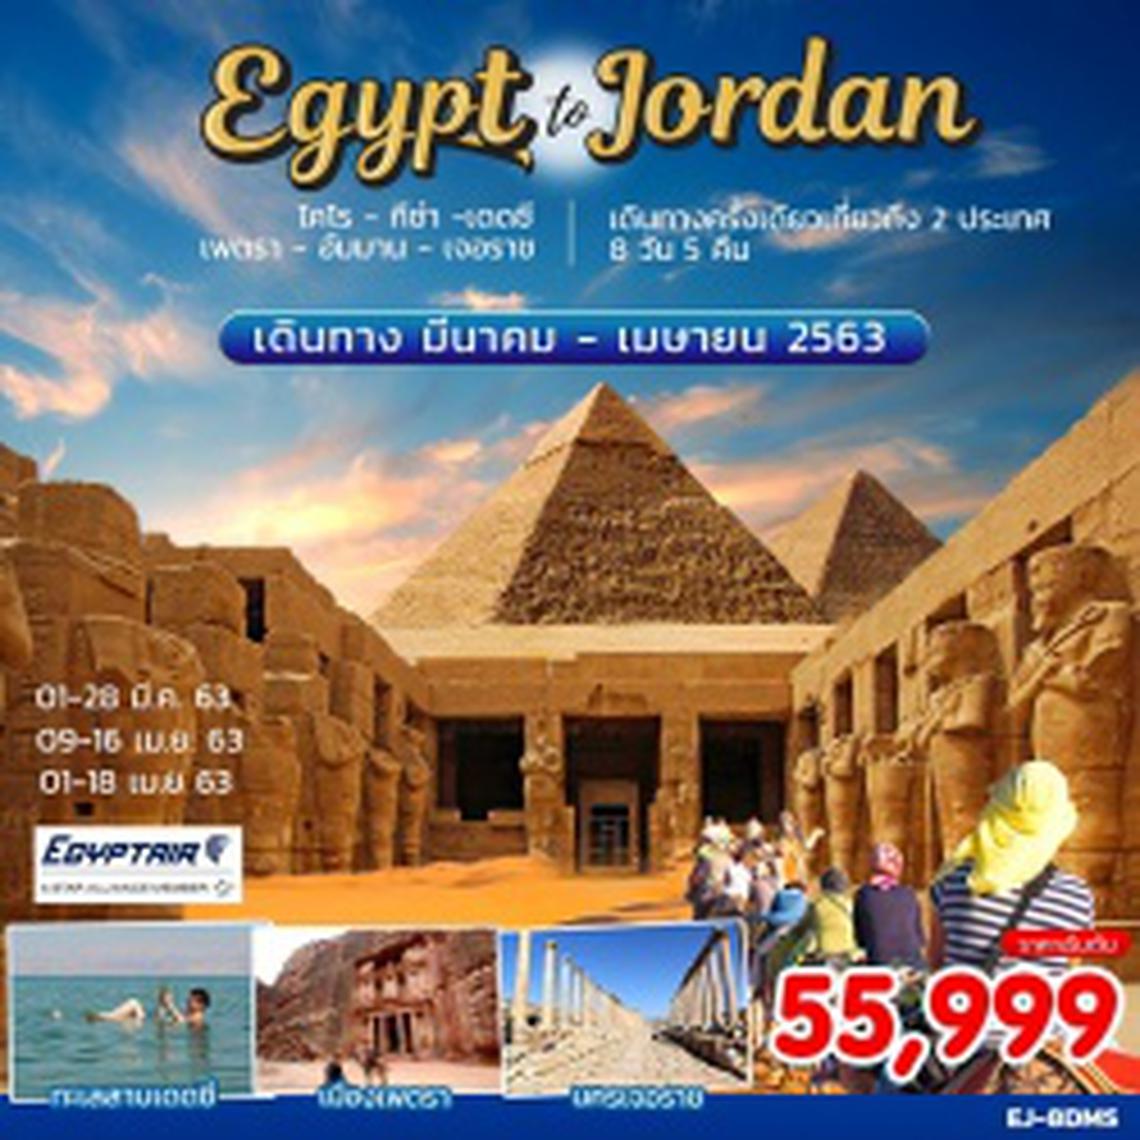 (EJ-8DMS) EGYPT+JORDAN 8 DAYS JUL-DEC 19 BY MS